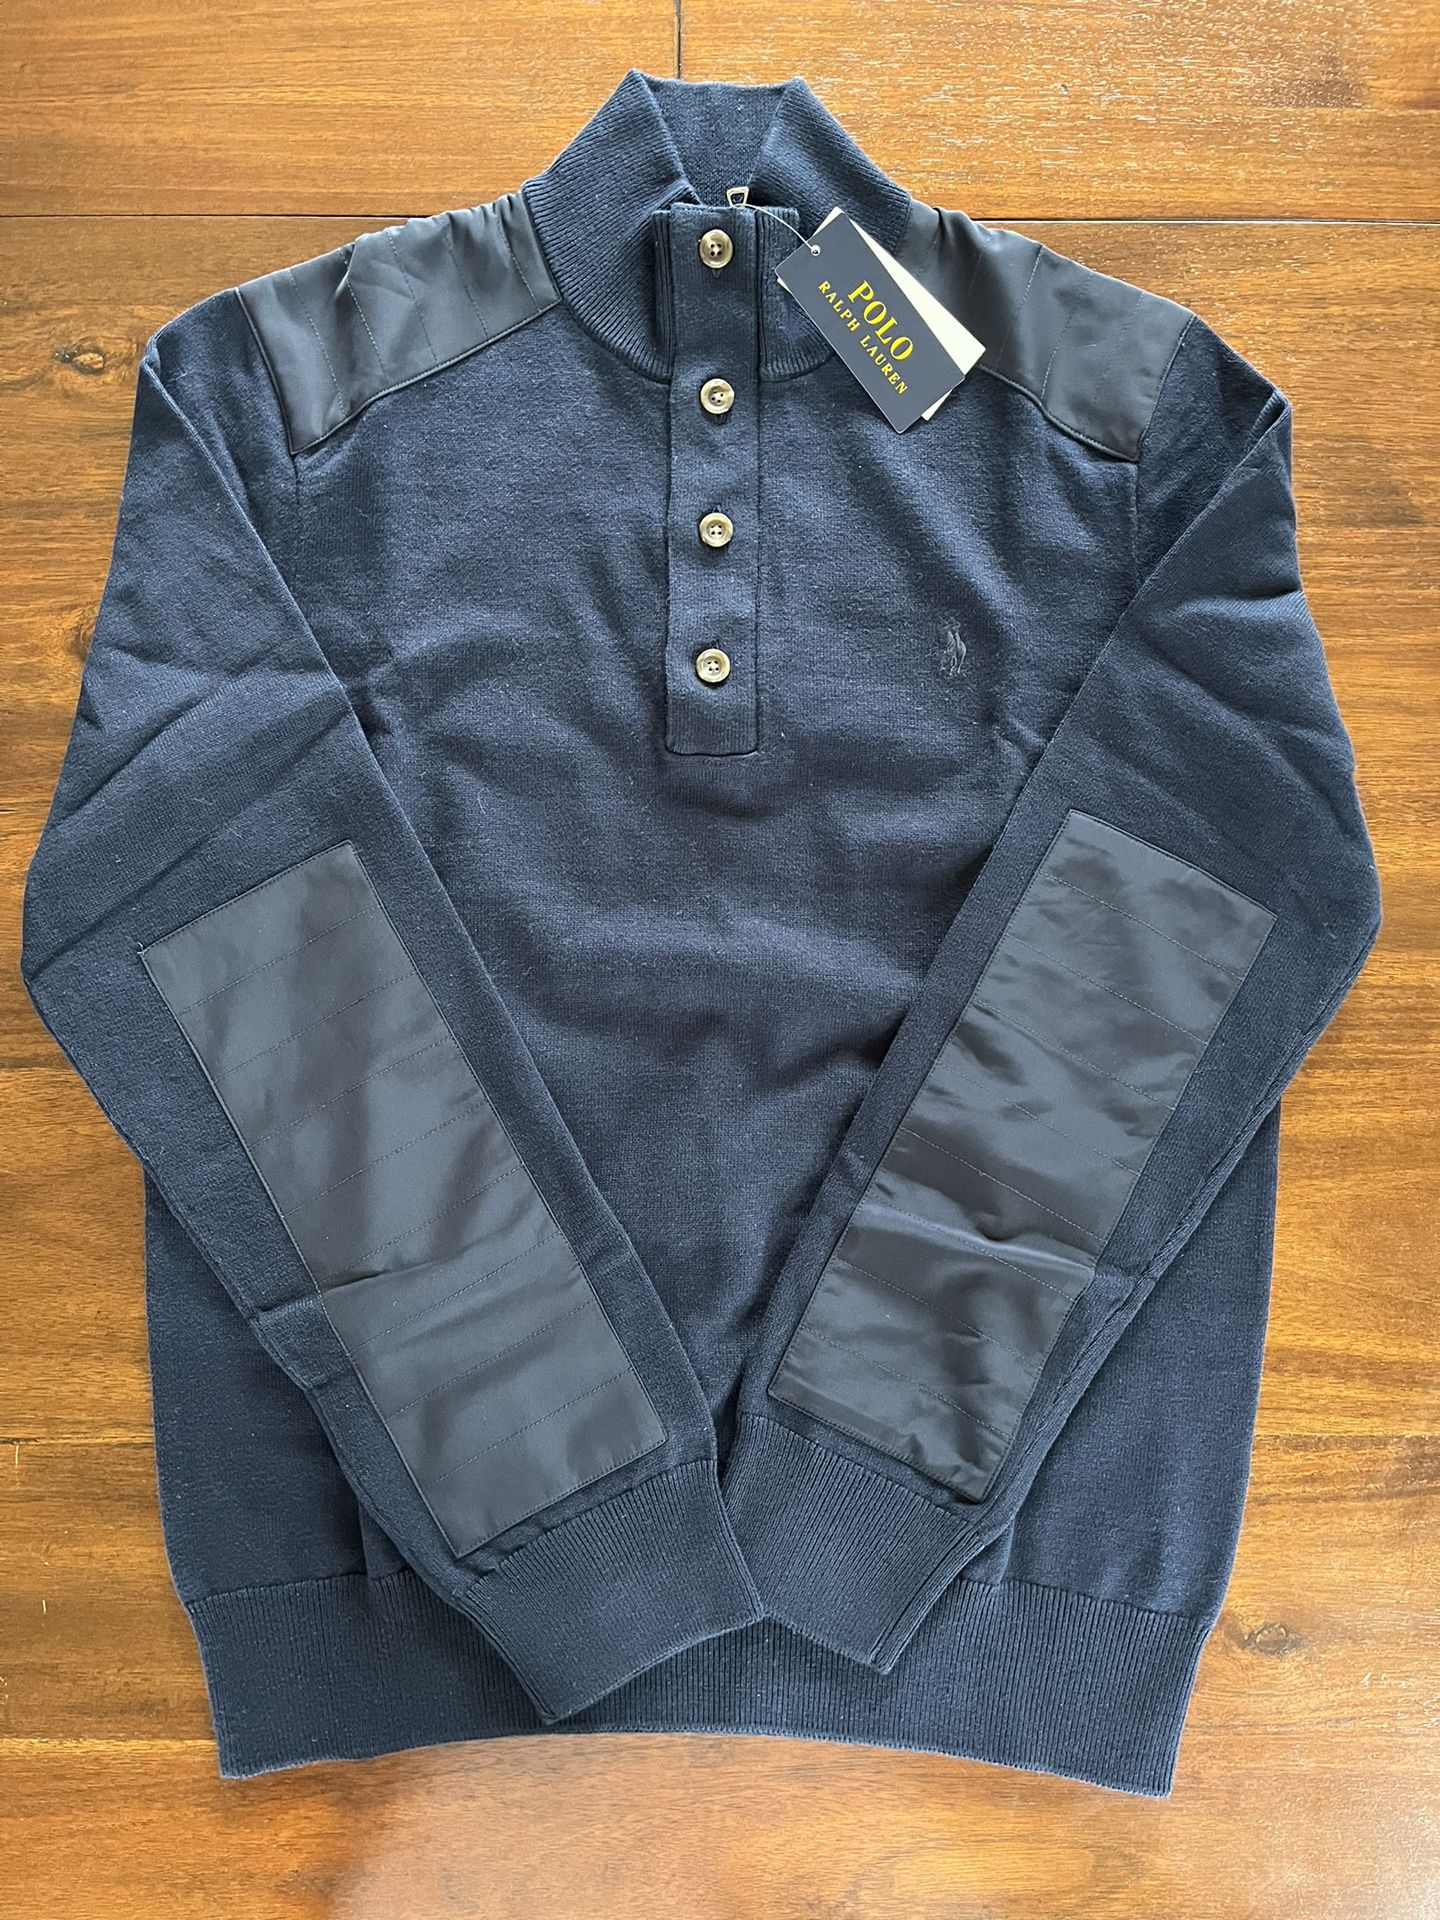 Polo Ralph Lauren Cotton Quarter Zip Sweater. Dark Navy